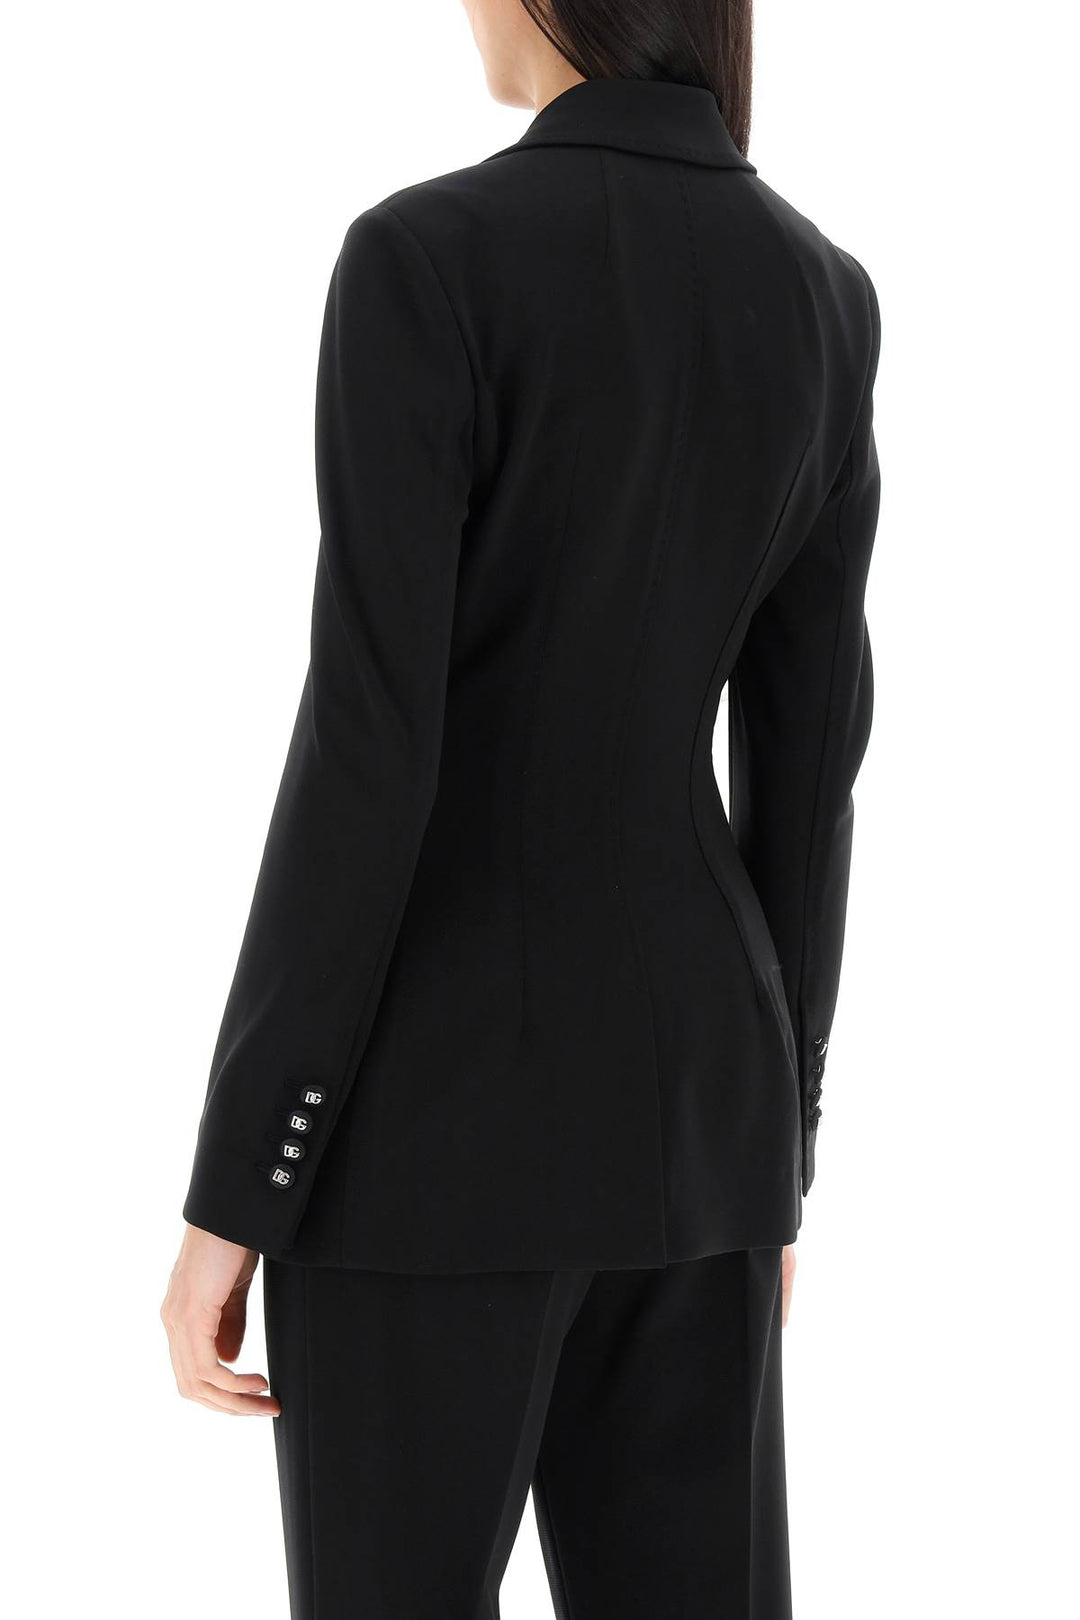 Dolce & Gabbana Milano Stitch Jersey Single Breasted Jacket   Black